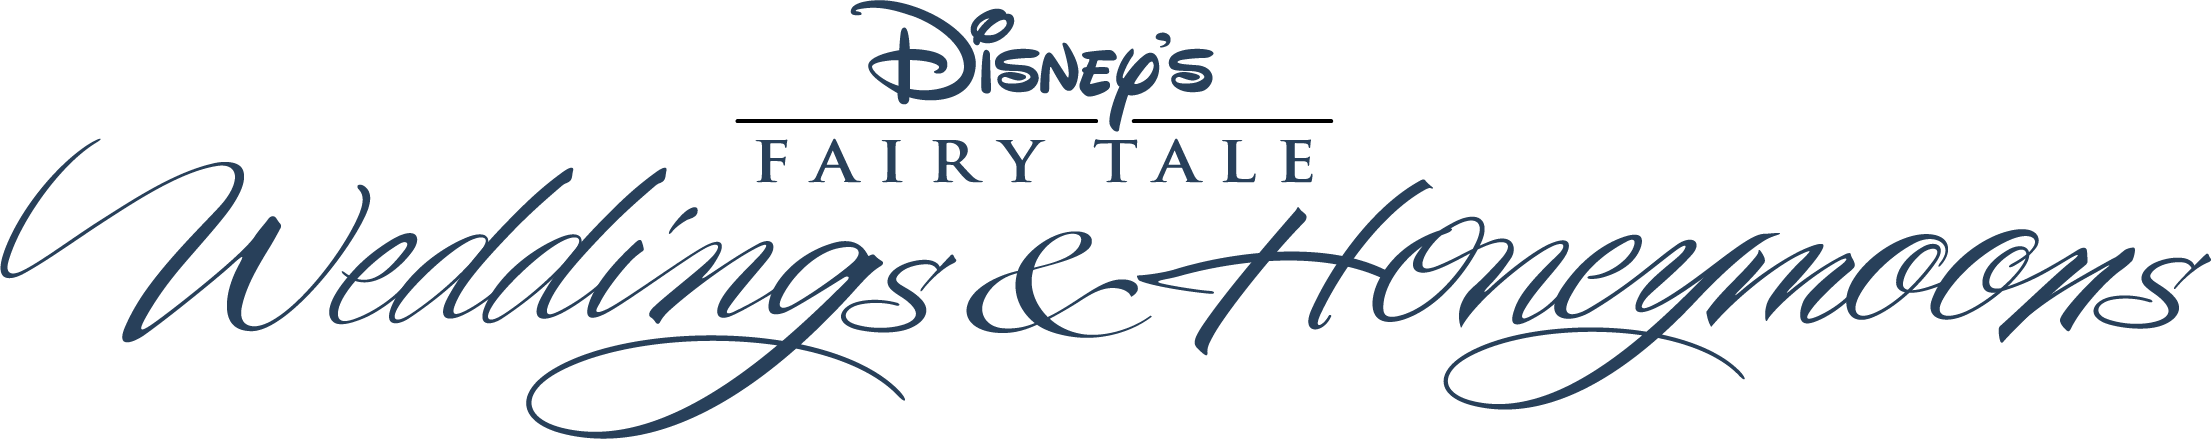 Disney’s Fairy Tale Weddings & Honeymoons